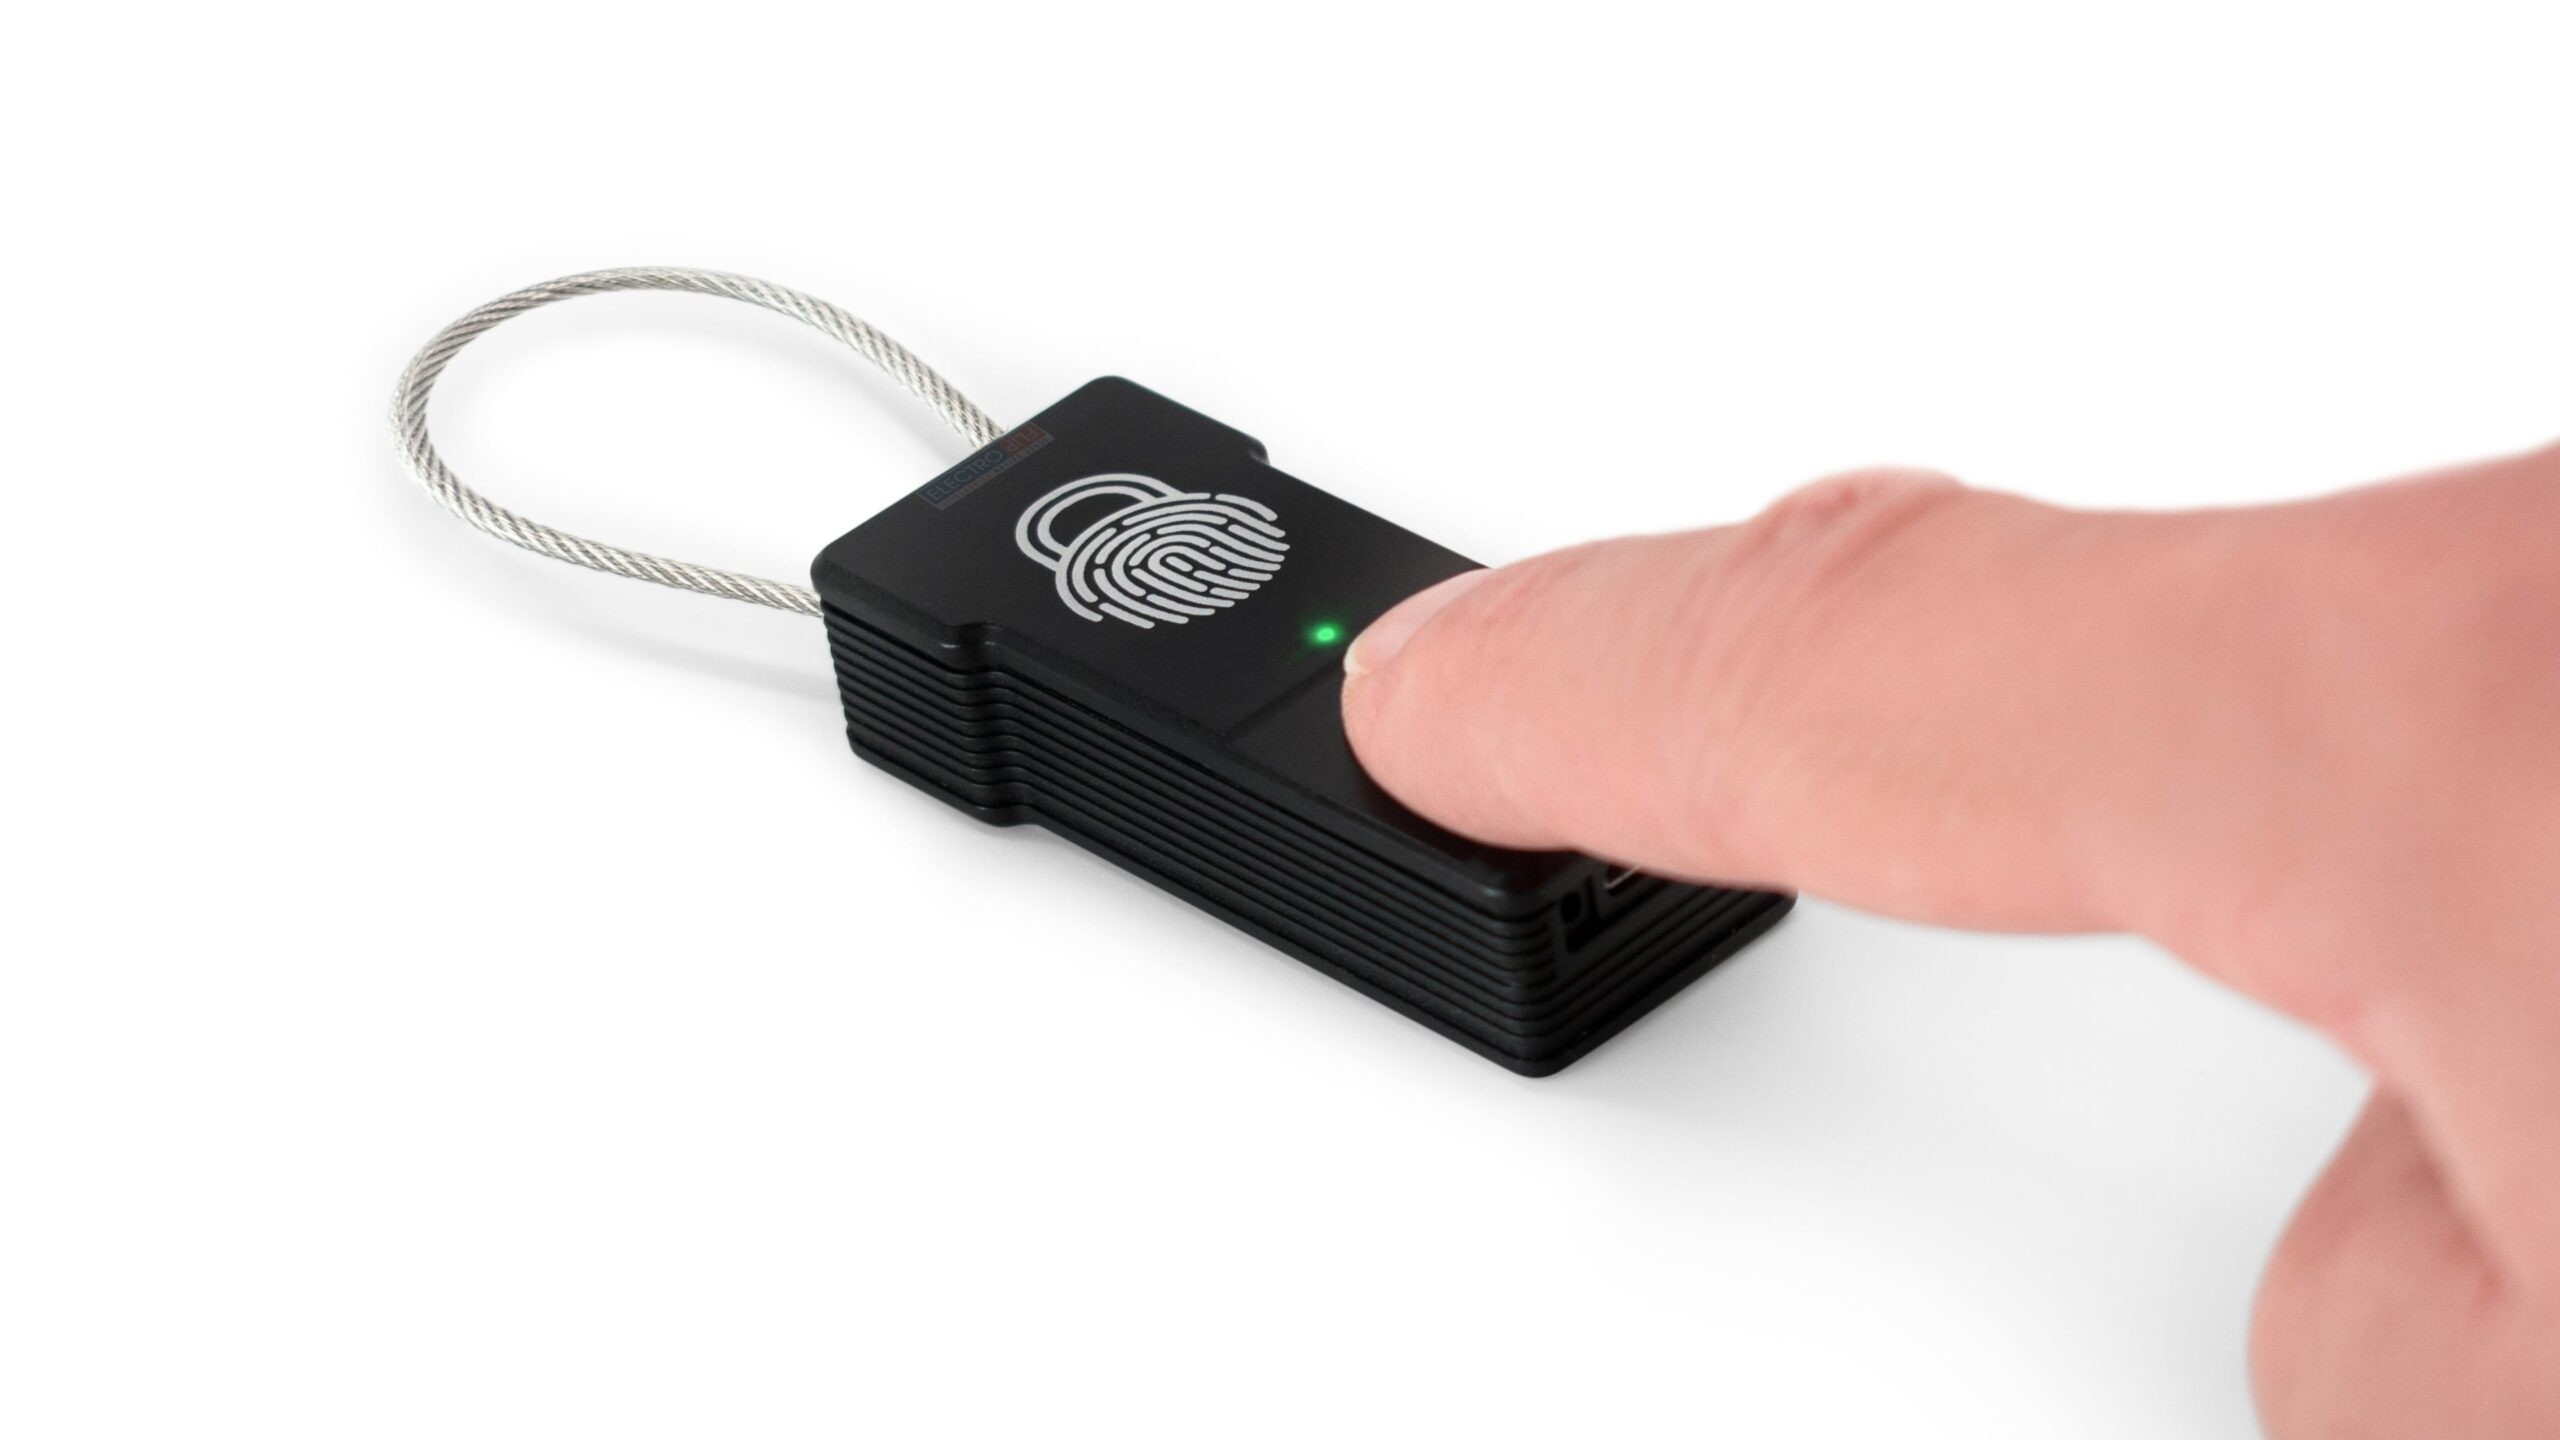 Thumbprint LOCK Biometric Padlock